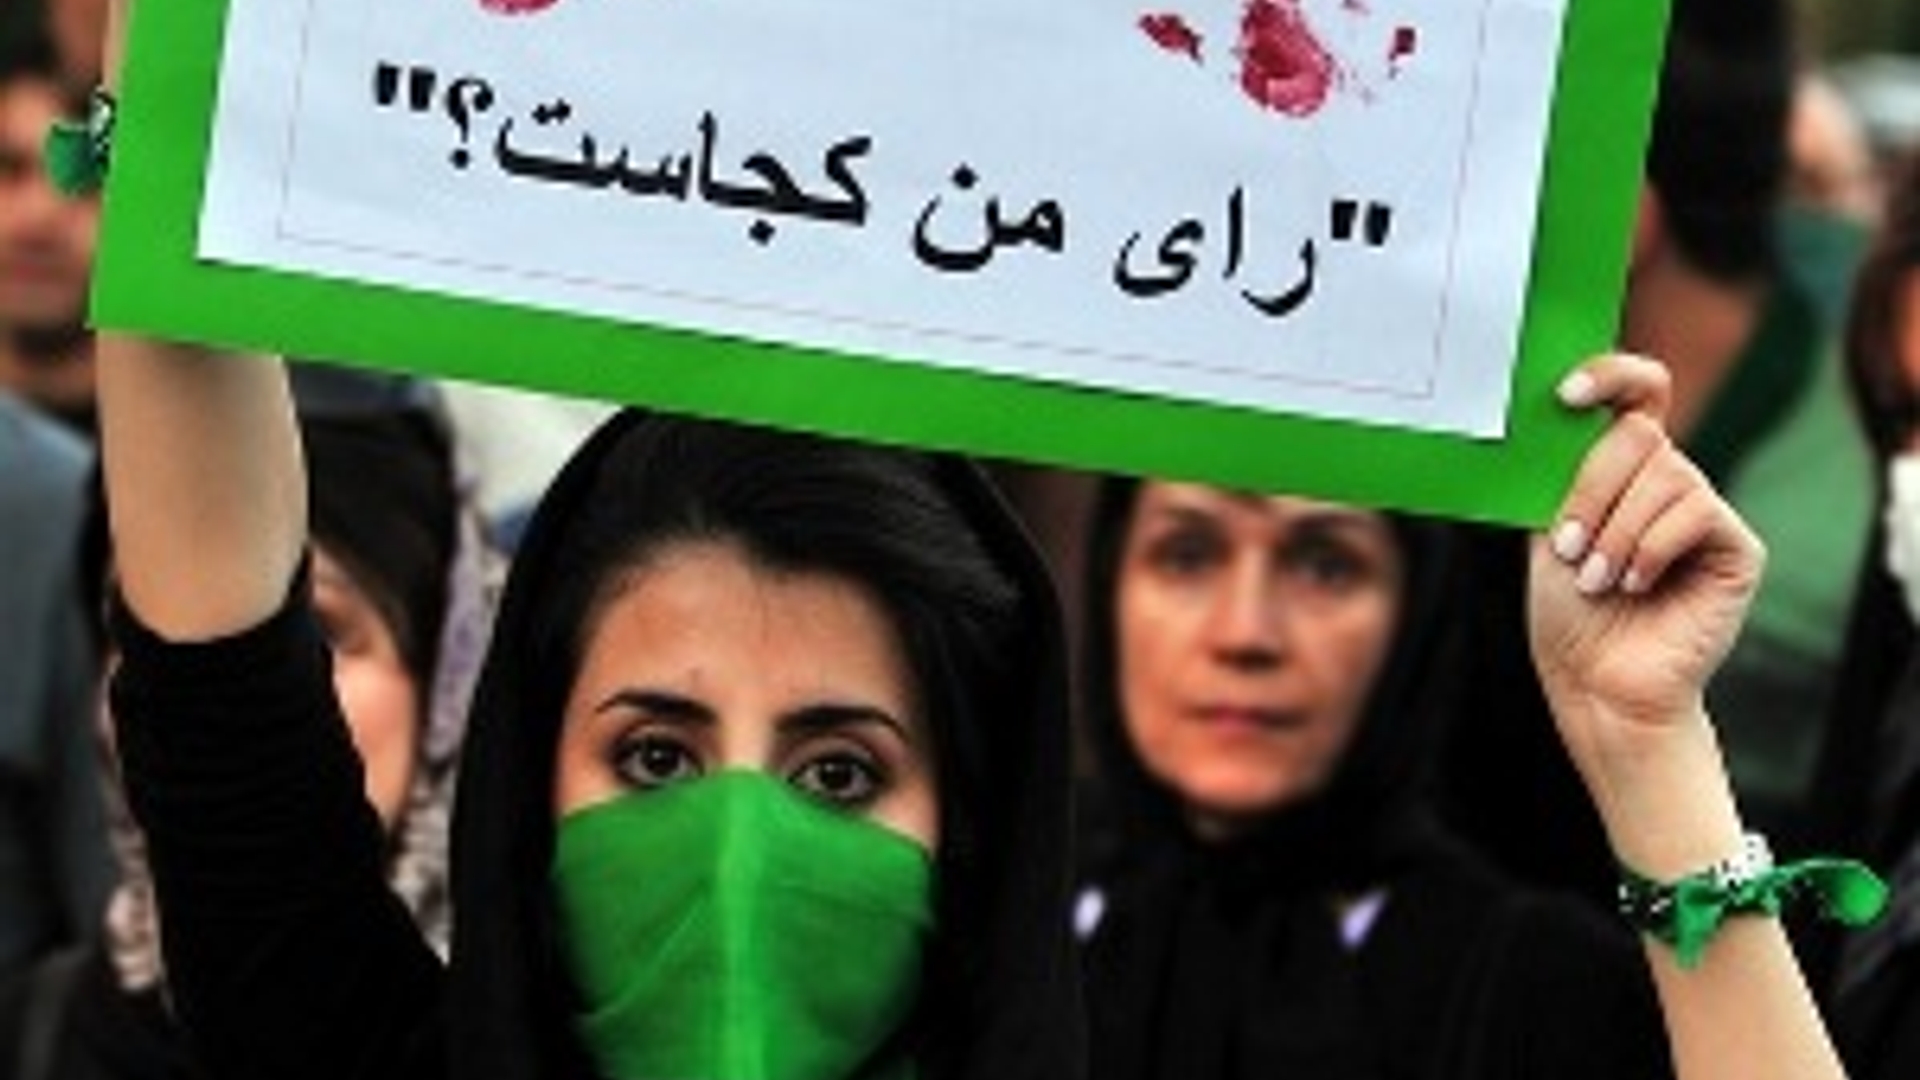 iran-protester-sign.jpg